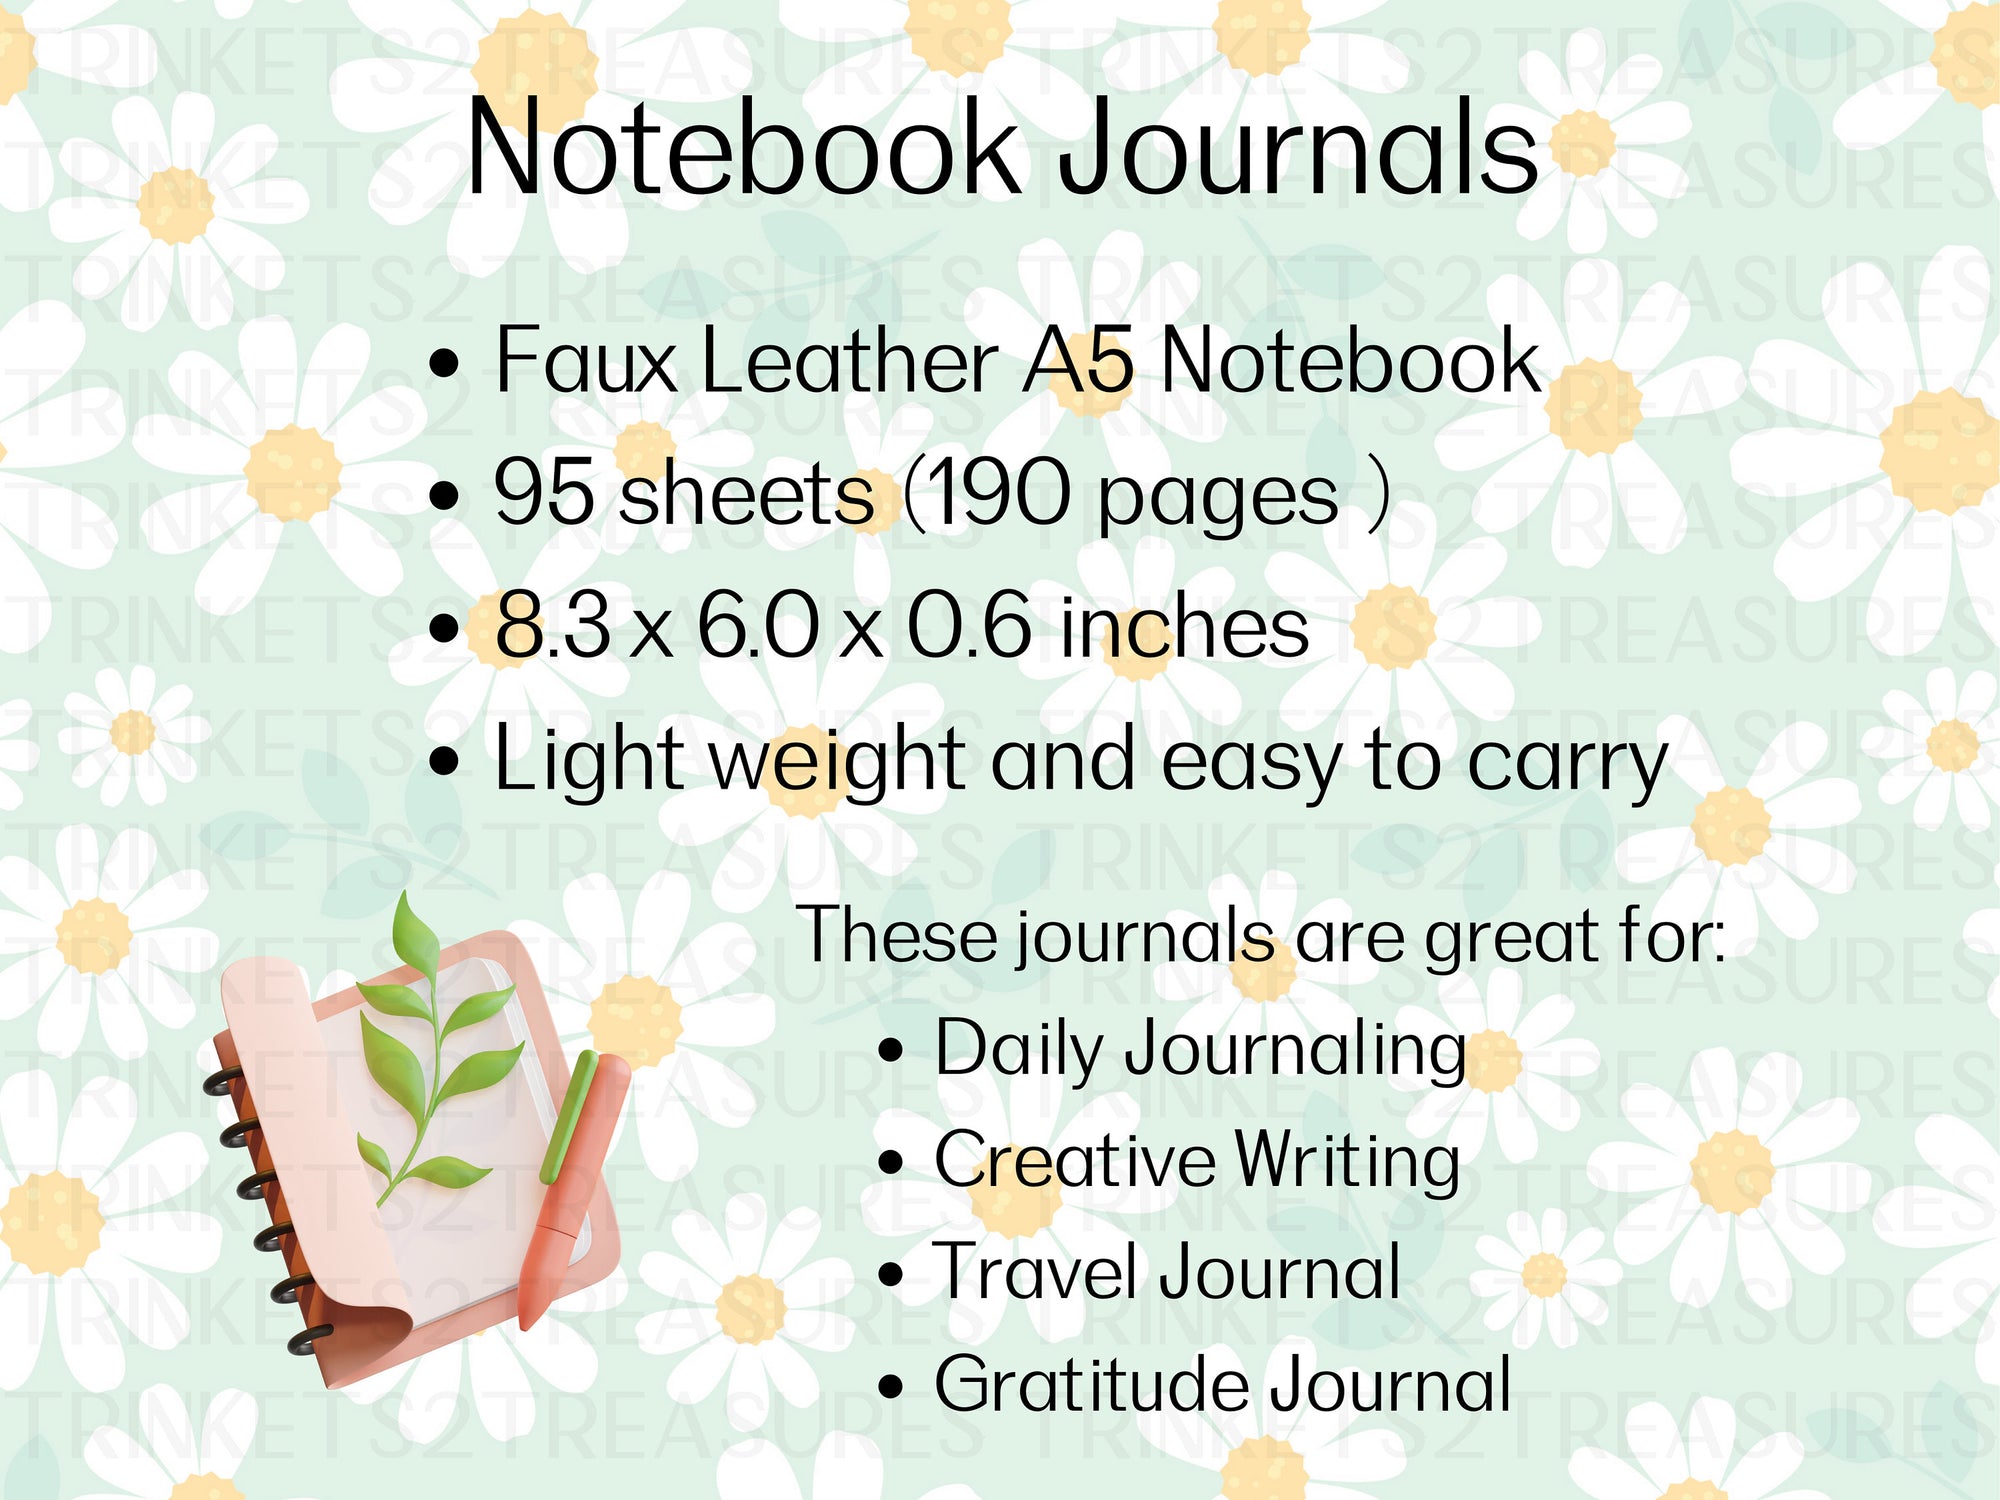 Personalized Journal/Writer's Notebook/Flowers/Keepsake Journal #818